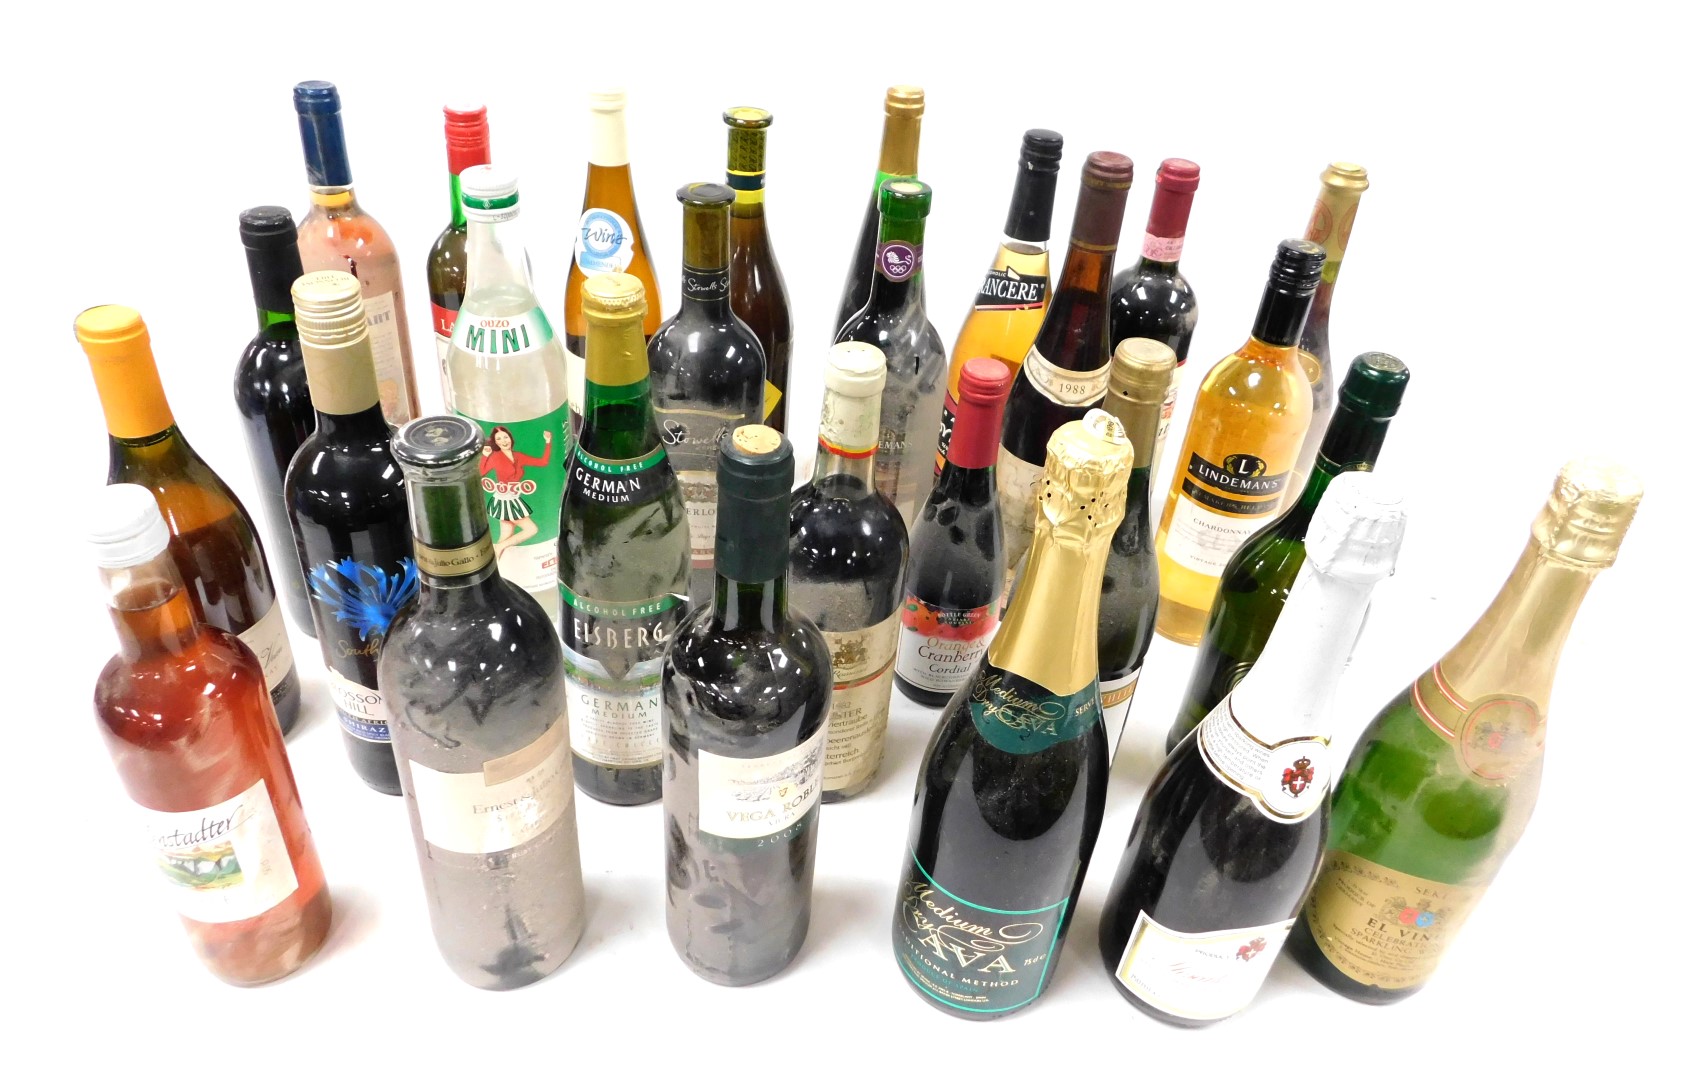 Mixed wines and spirits, including Eschner Blauburgunder 1988, Ruster Trockenbeerenauslese 1982, Cro